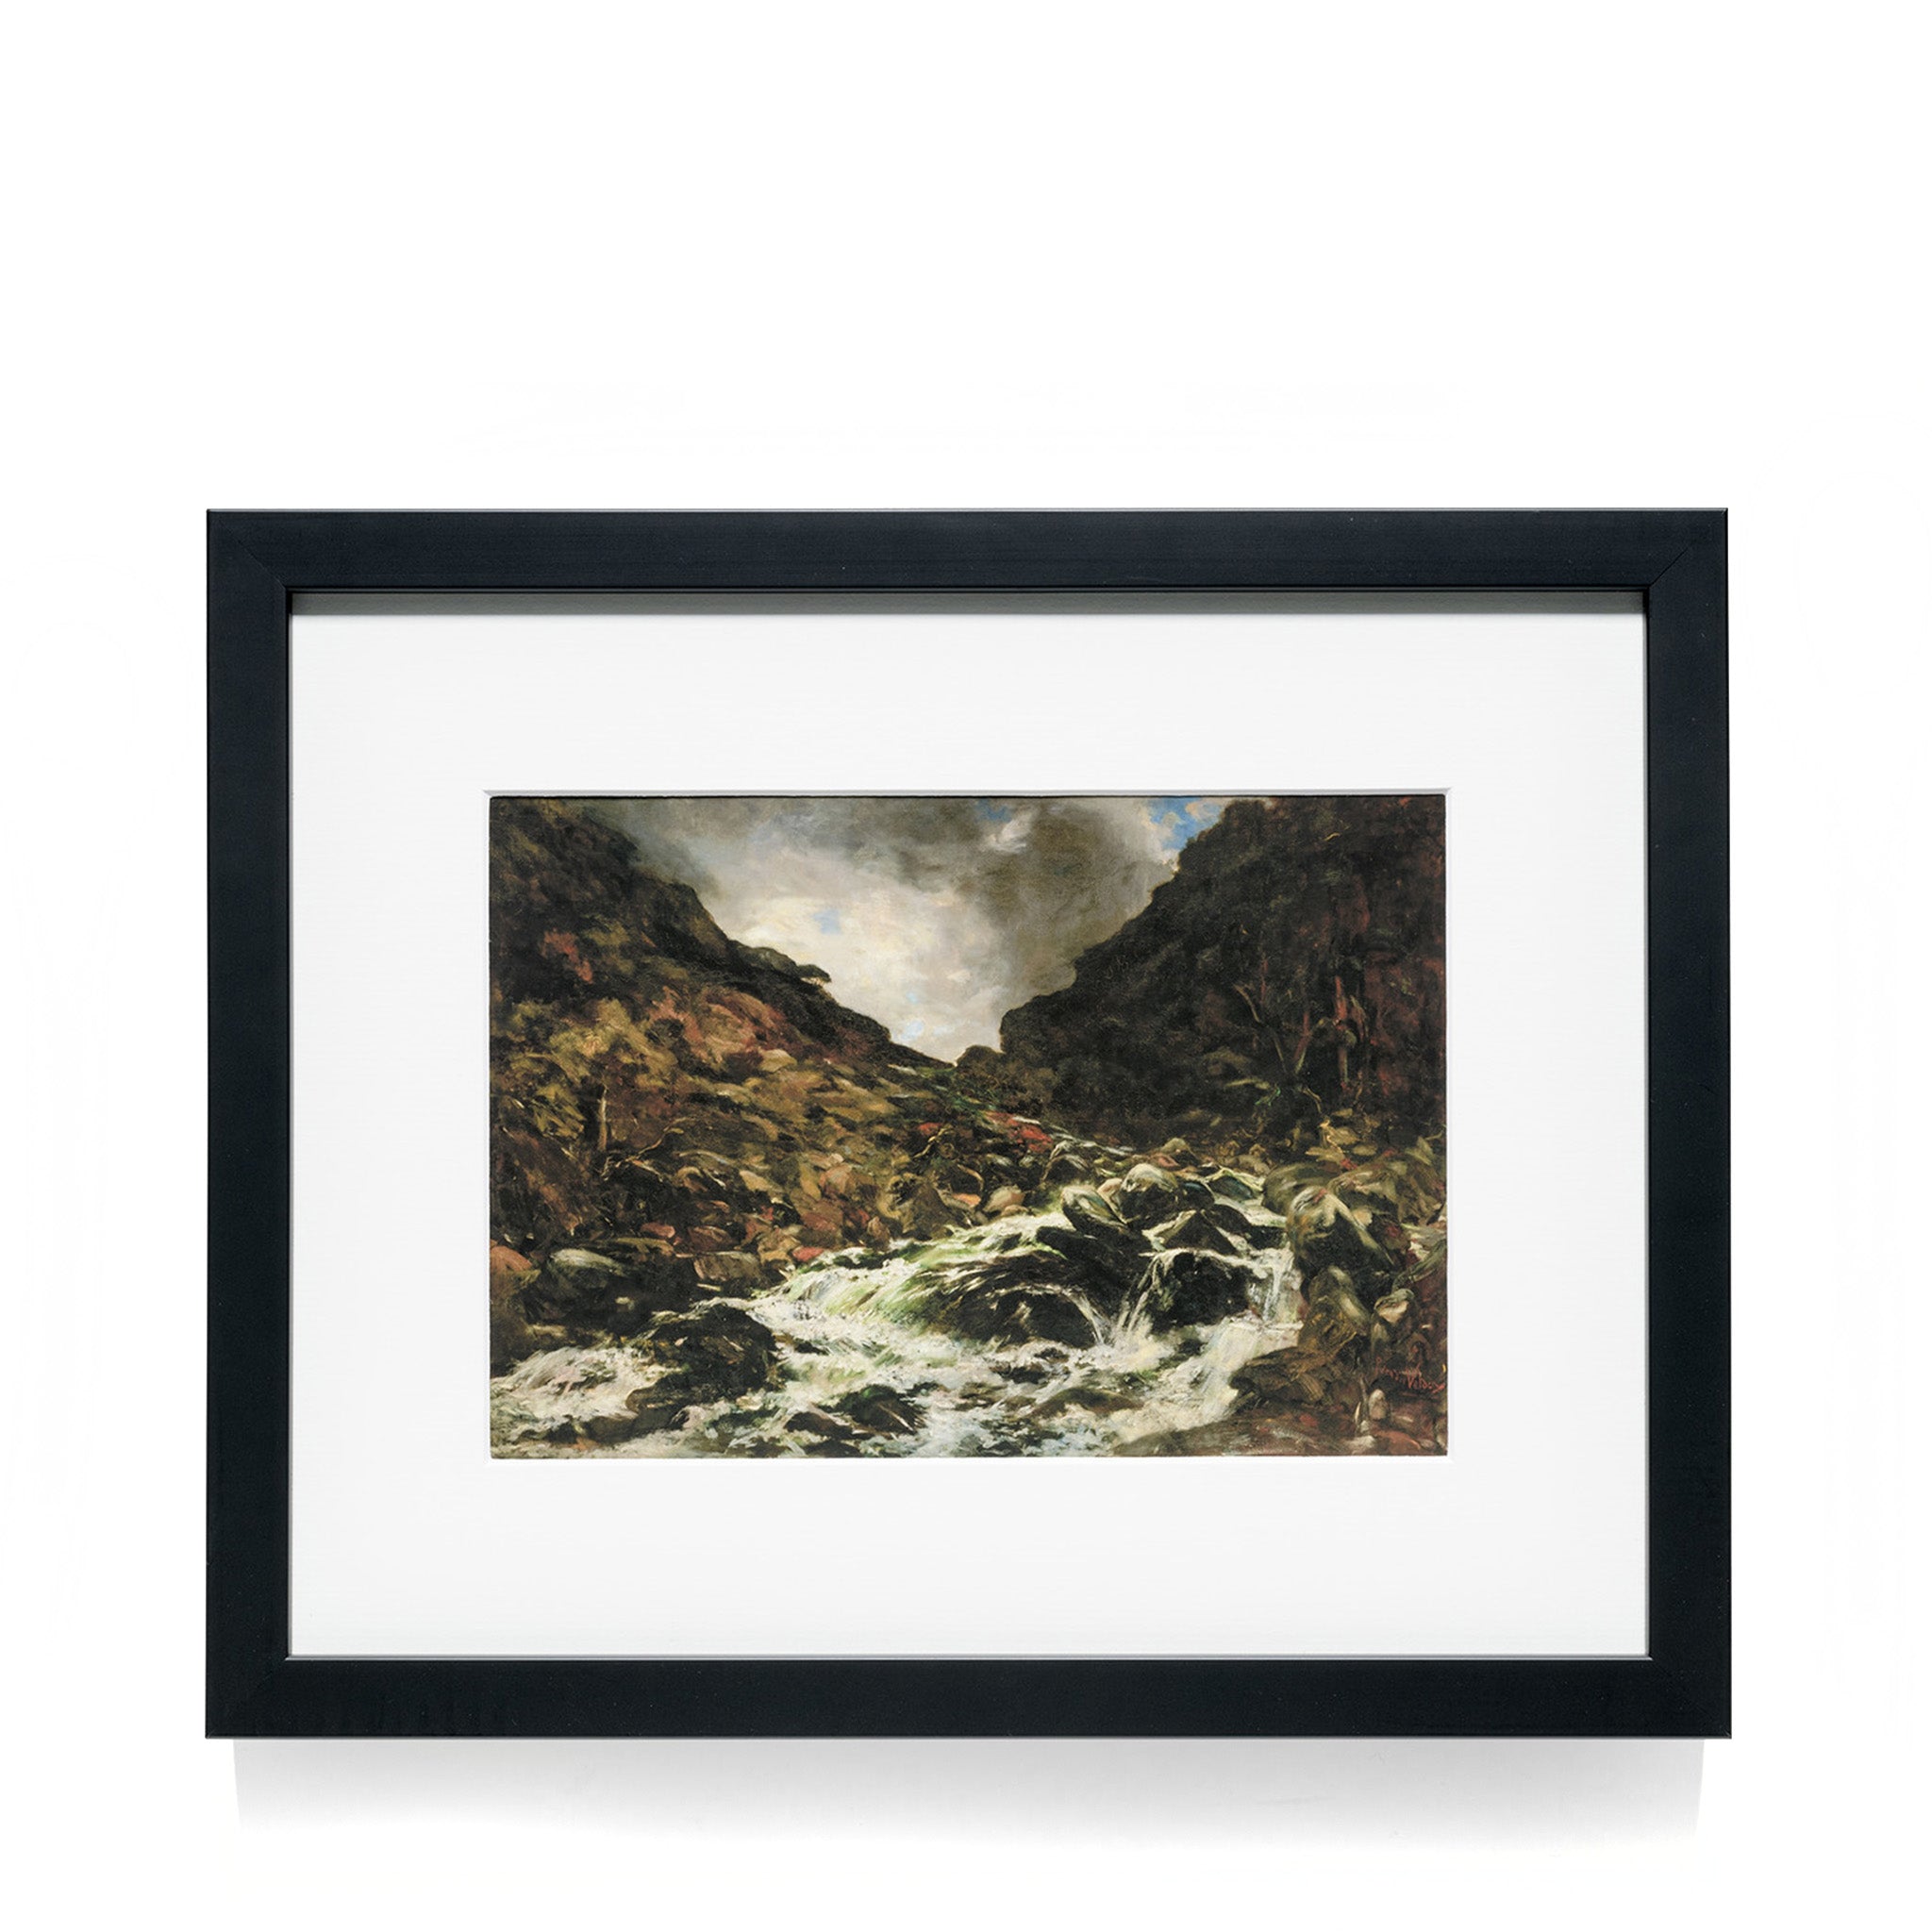 Petrus van der Velden Mountain Stream, Otira Gorge Reproduction Print